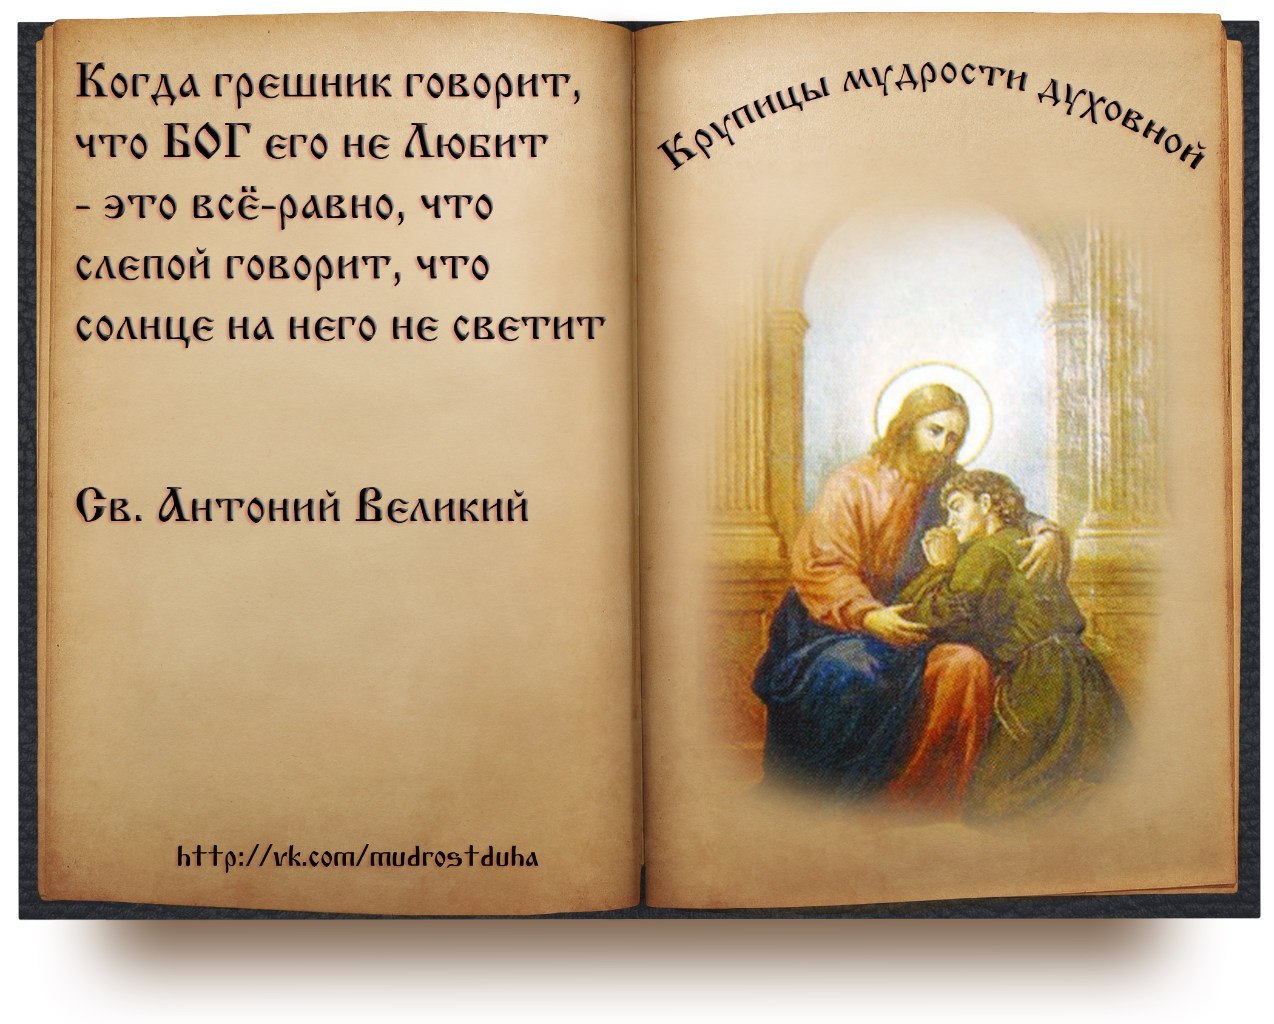 5dd08687e526a - Высказывания православных святых